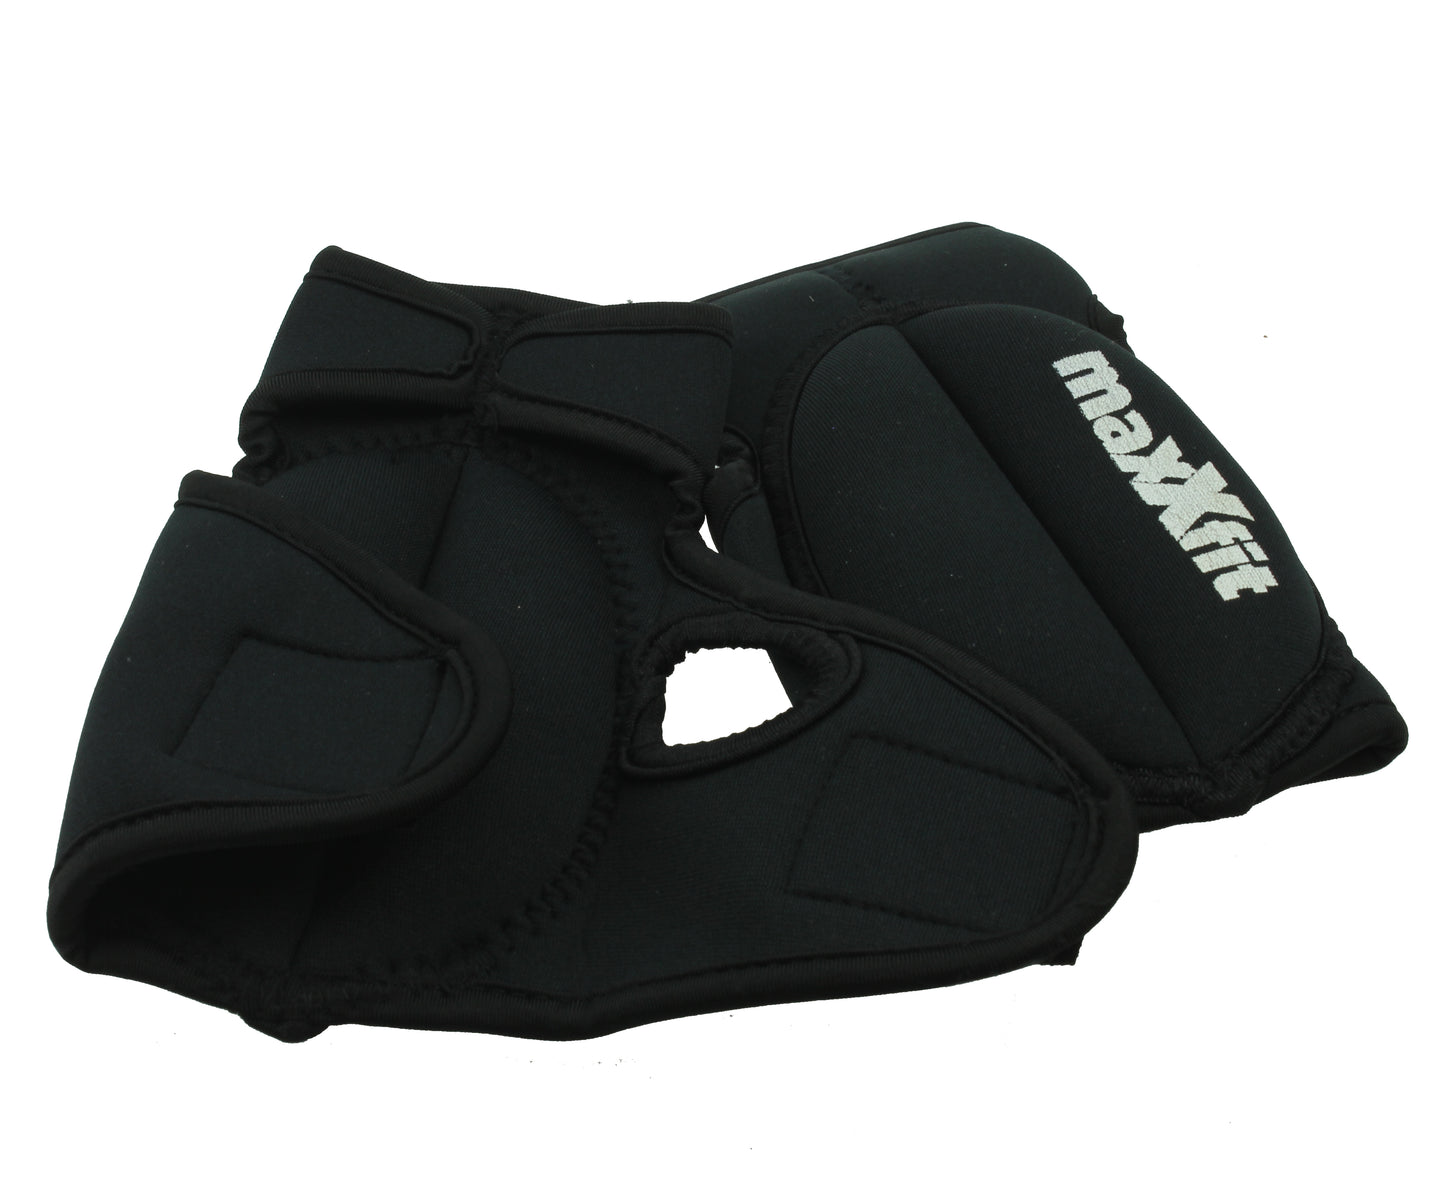 Maxxfitt Adjustable Weighted Gloves Strength Running Training Gym 1kg